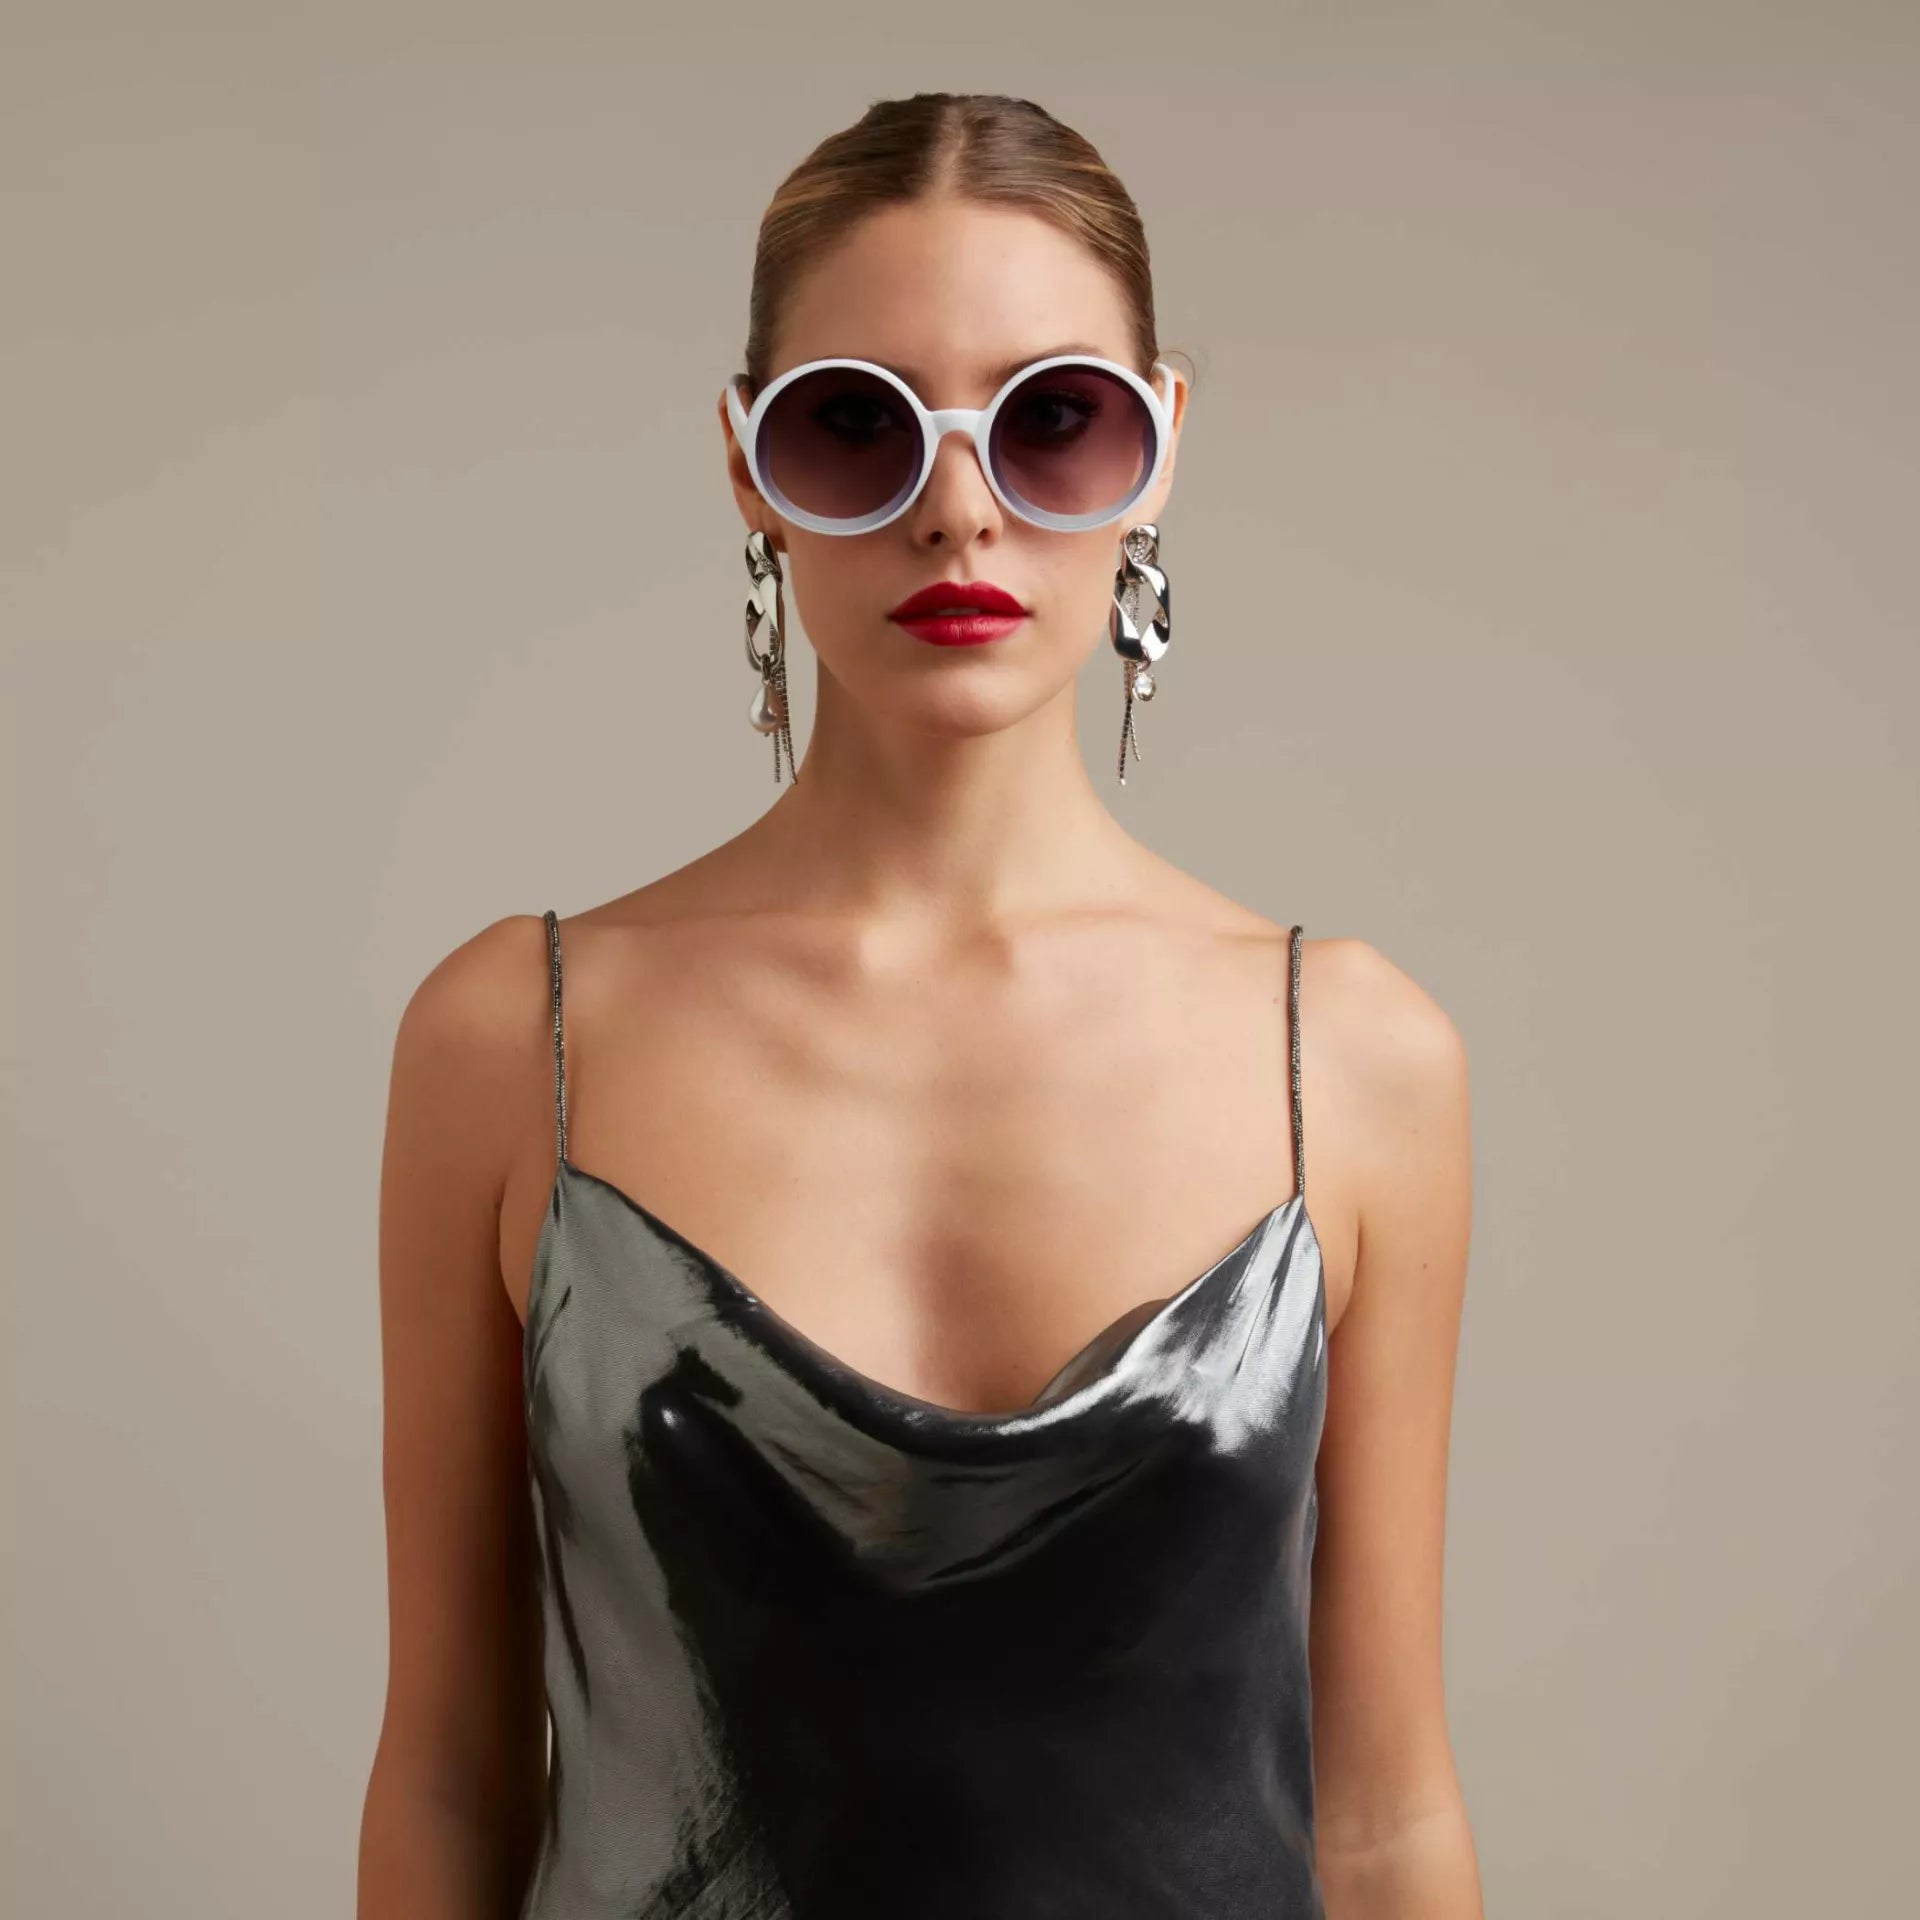 Fabulous Gifts Okkia Sunglasses Tondo Optical White by Weirs of Baggot Street